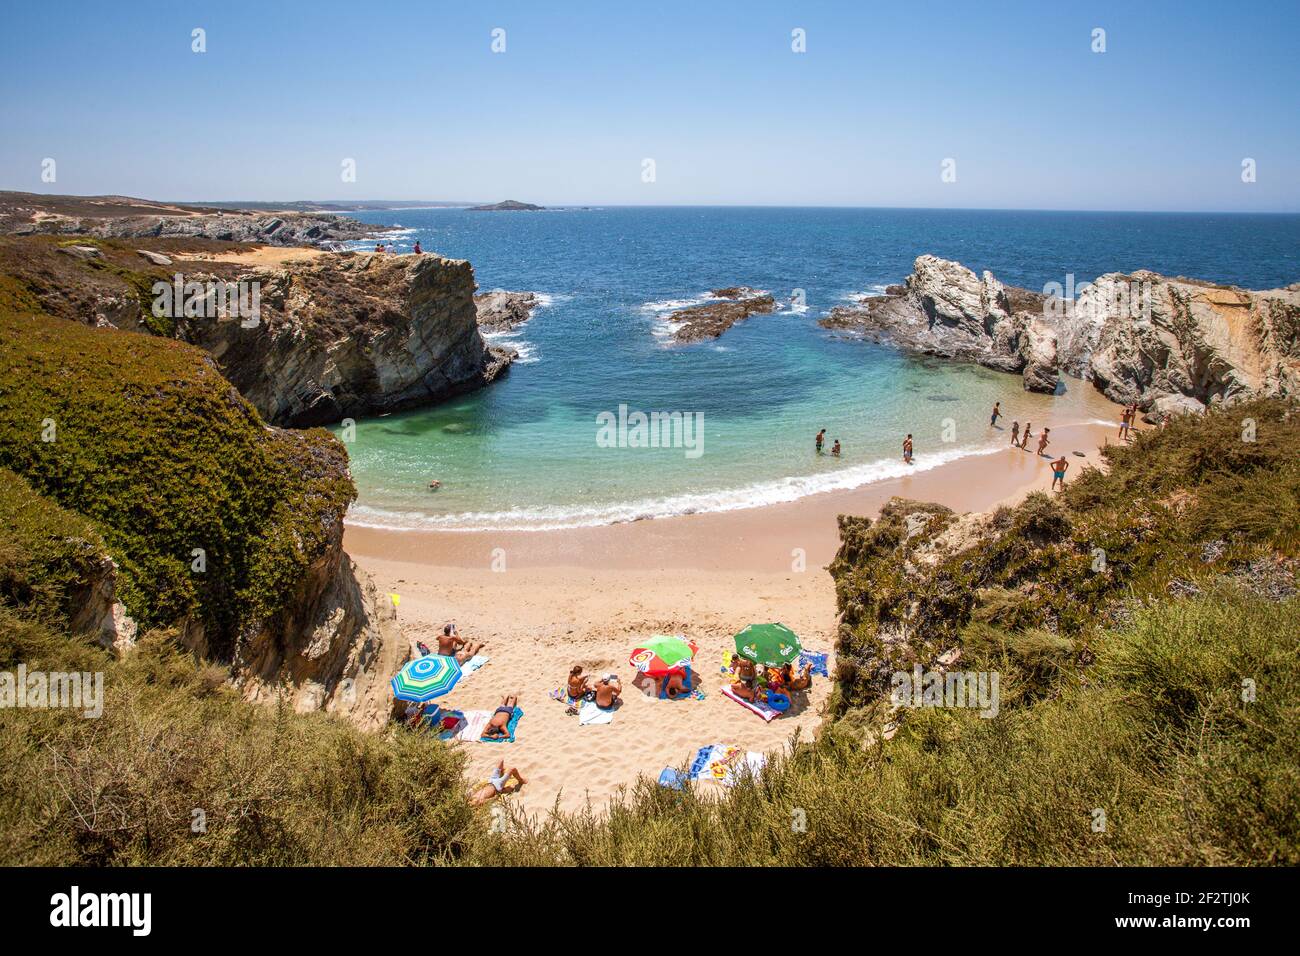 Porto covo portugal buizinhos hi-res stock photography and images - Alamy